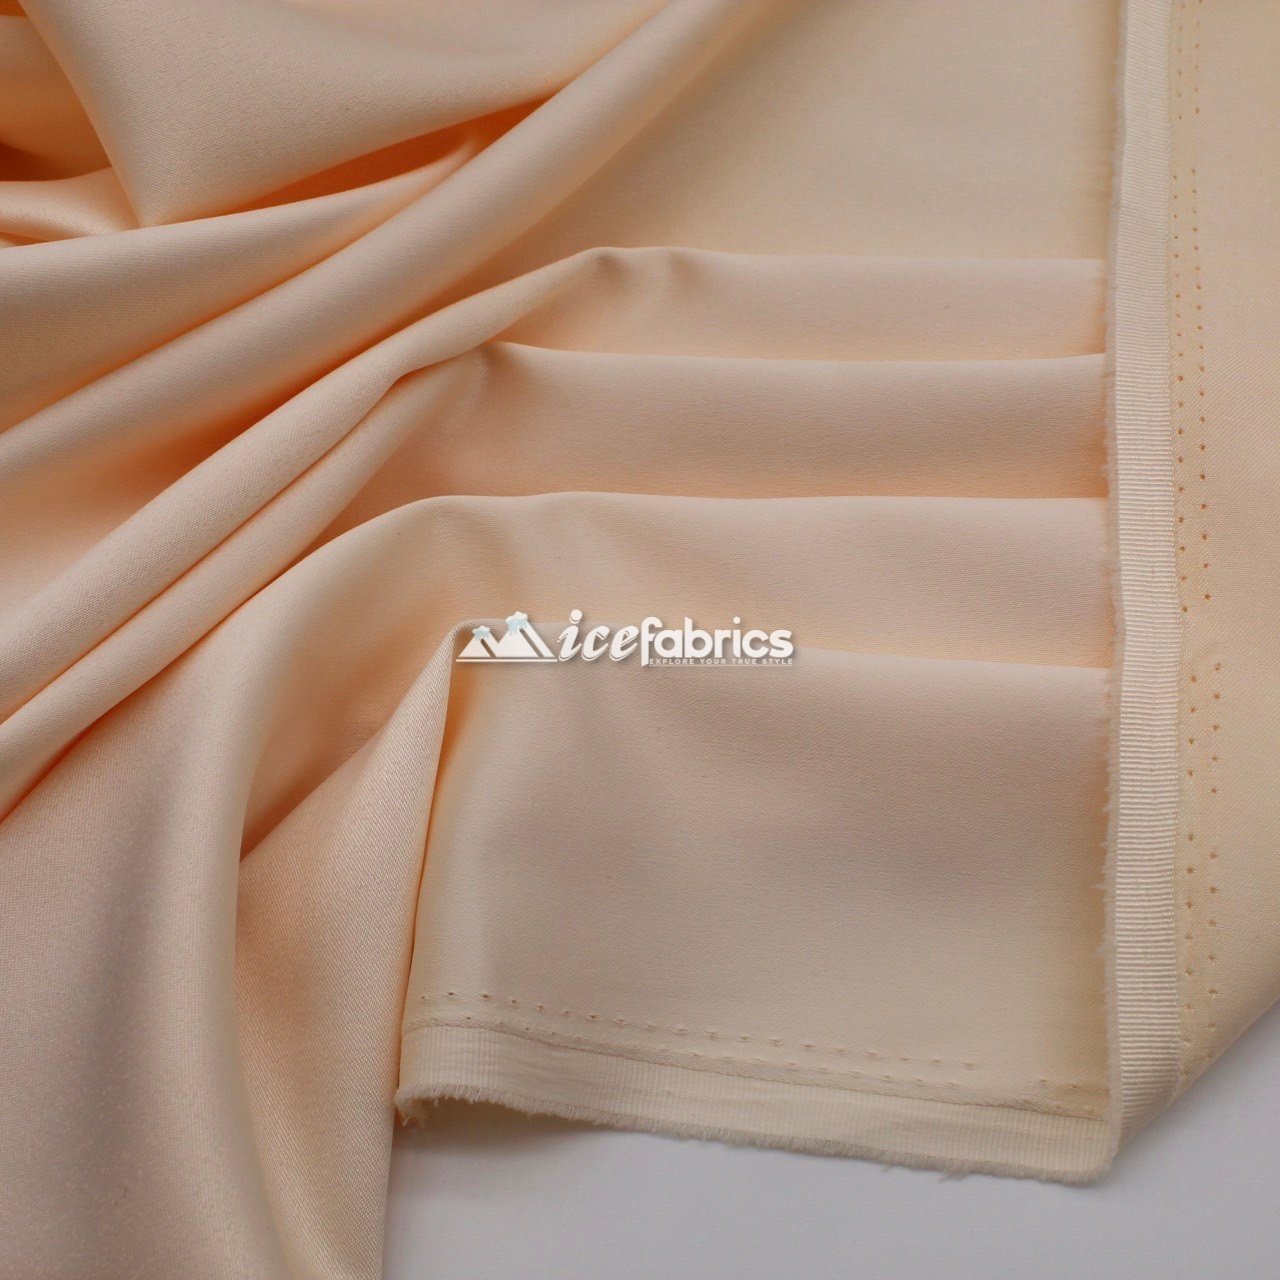 Thick Silky Armani %3 Stretch Shiny Satin Fabric By The Roll (20 YARD)Satin FabricICEFABRICICE FABRICSBlushBy The Roll (60" Wide)Thick Silky Armani %3 Stretch Shiny Satin Fabric By The Roll (20 YARD) ICEFABRIC